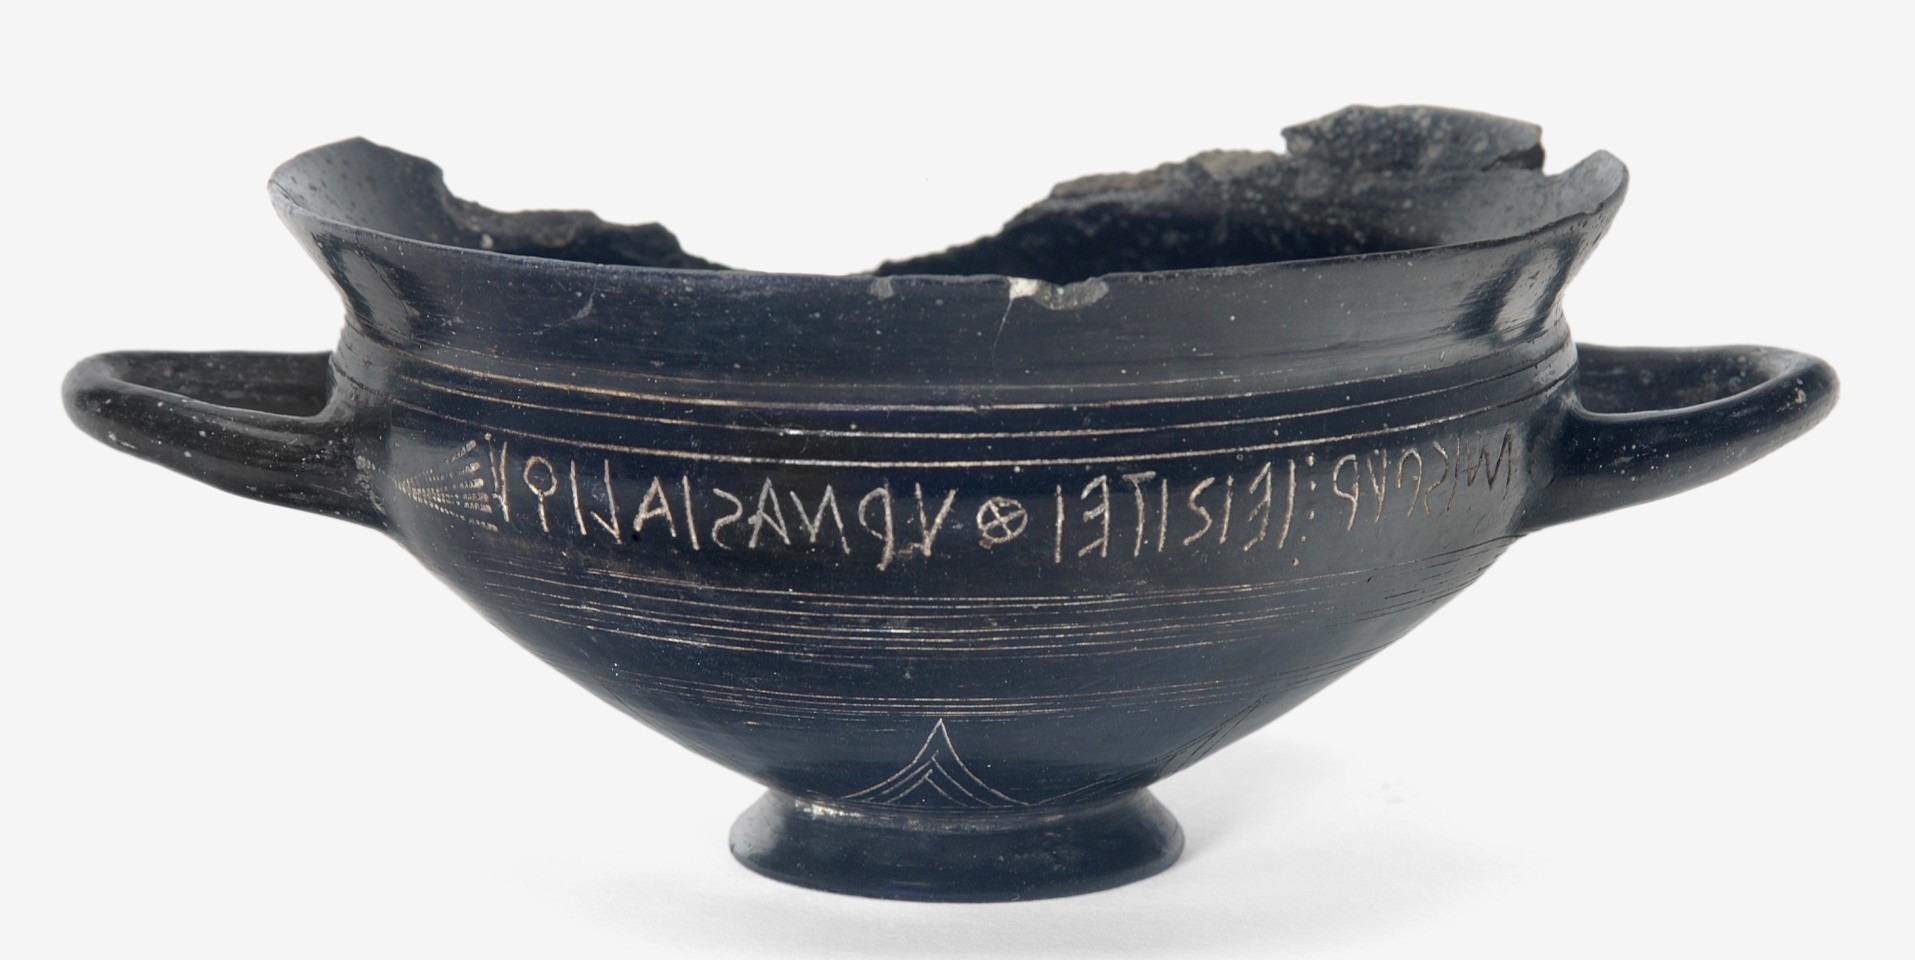 Trinkschale mit etruskischer Besitzerinschrift (Kylix) (Museum August Kestner CC BY-NC-SA)